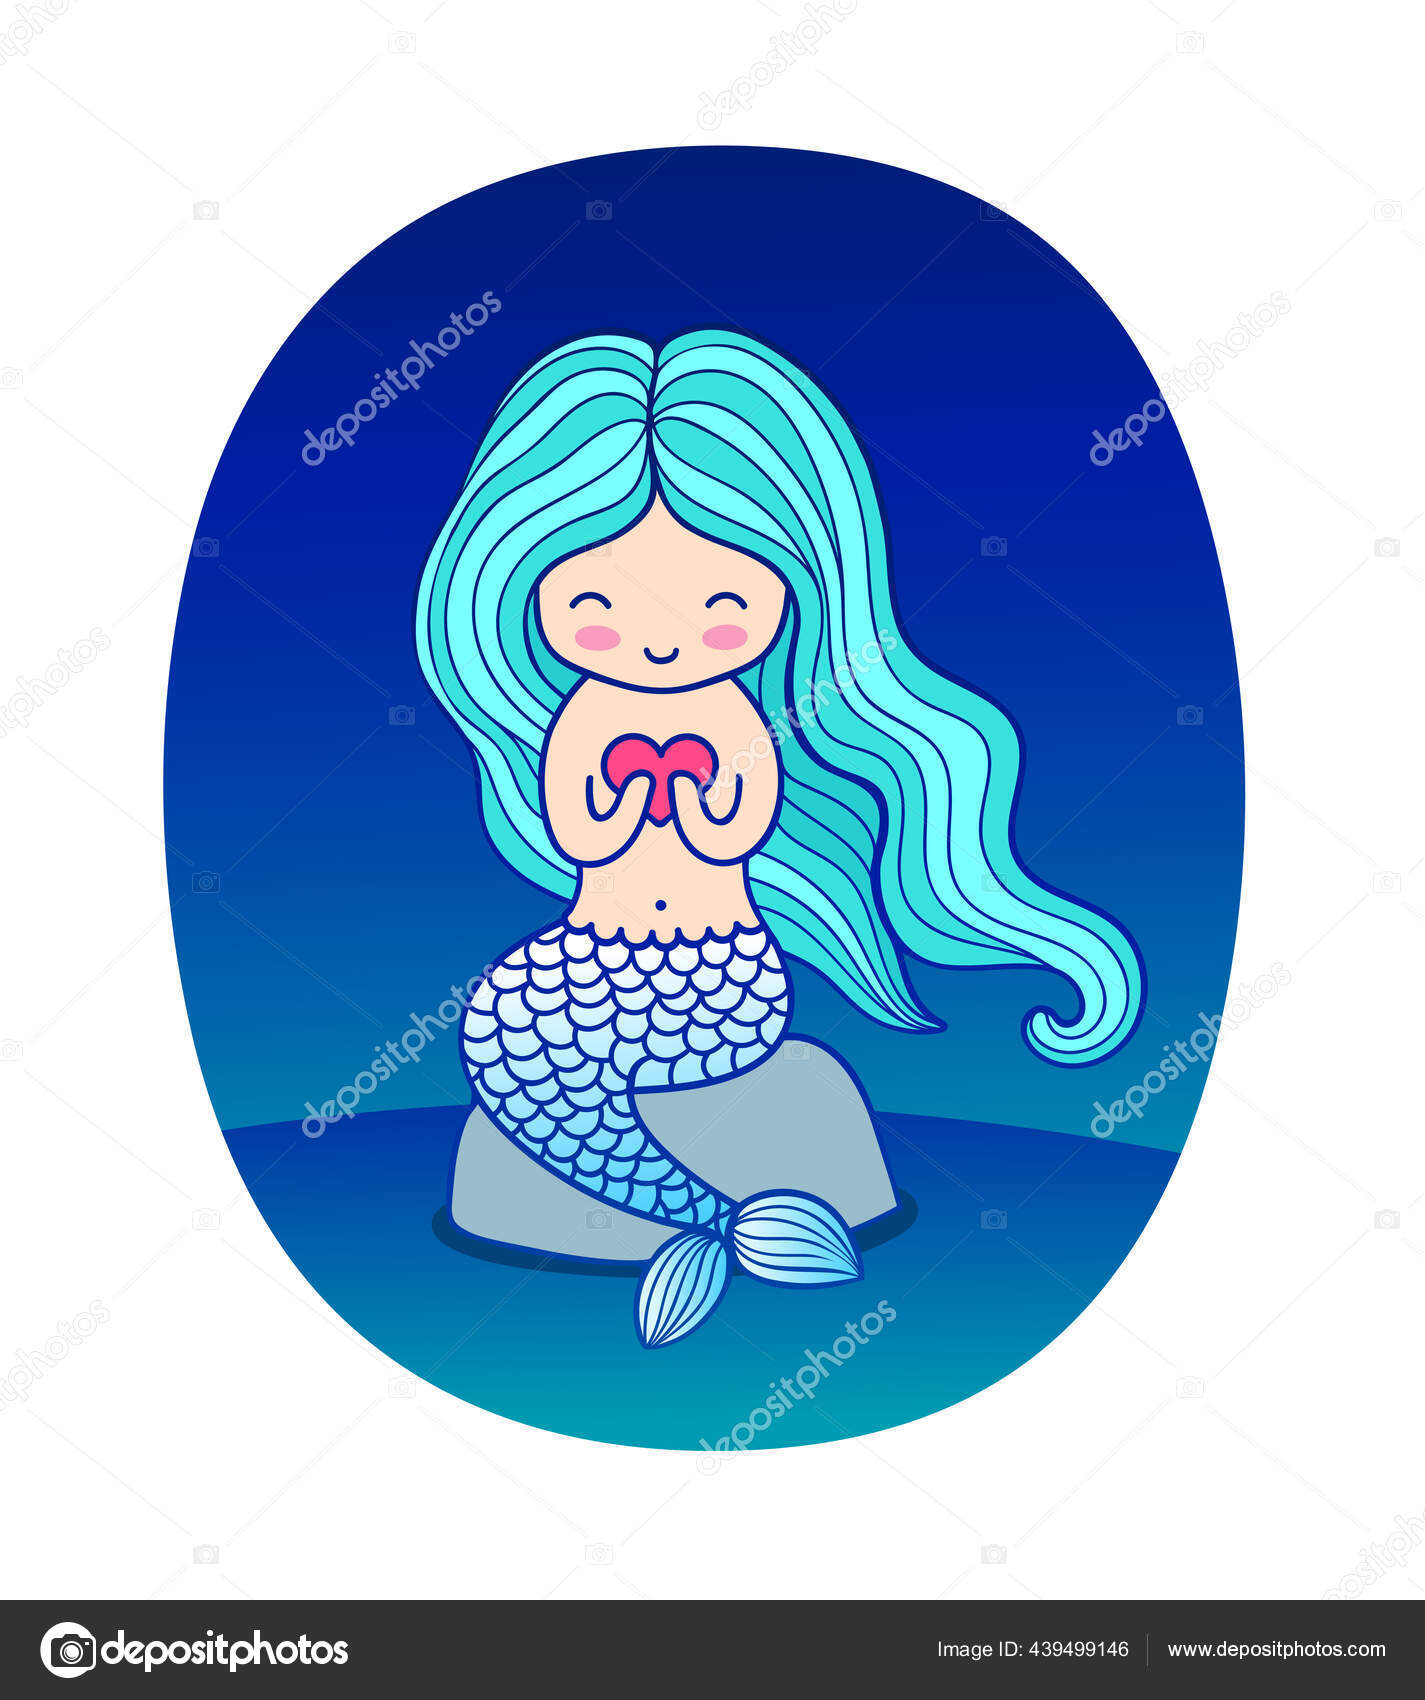 Kawaii menina desenho presente boneca, menina, roxo, azul, fita